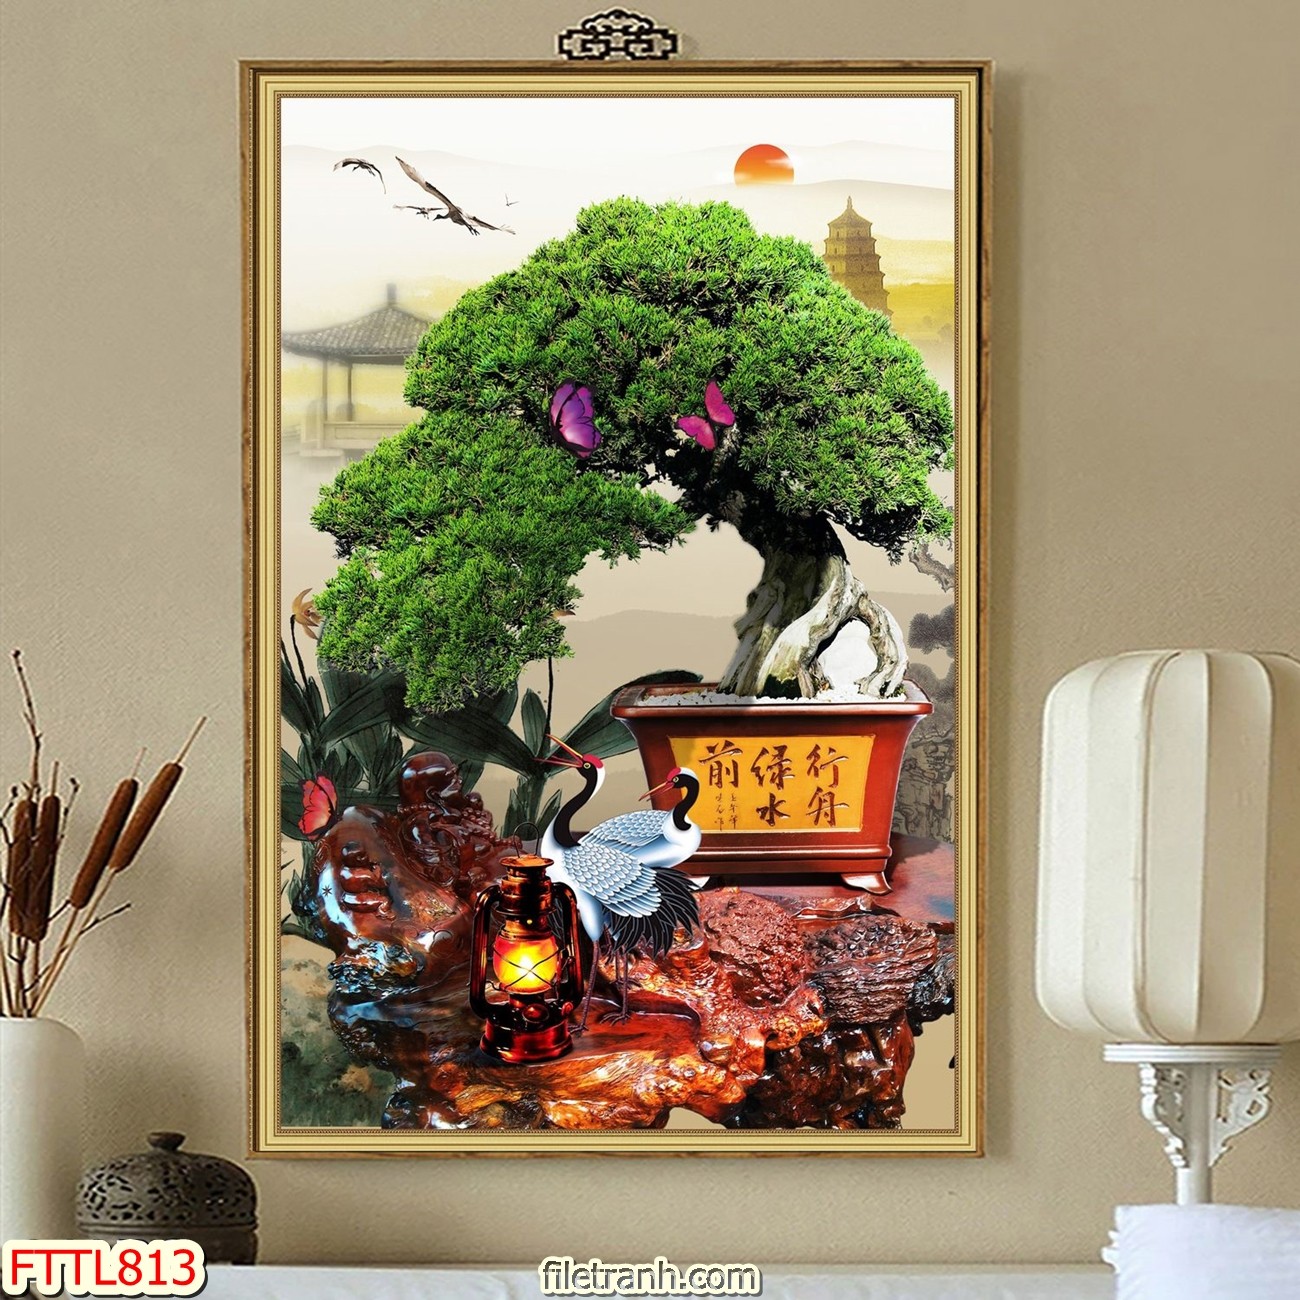 https://filetranh.com/file-tranh-chau-mai-bonsai/file-tranh-chau-mai-bonsai-fttl813.html